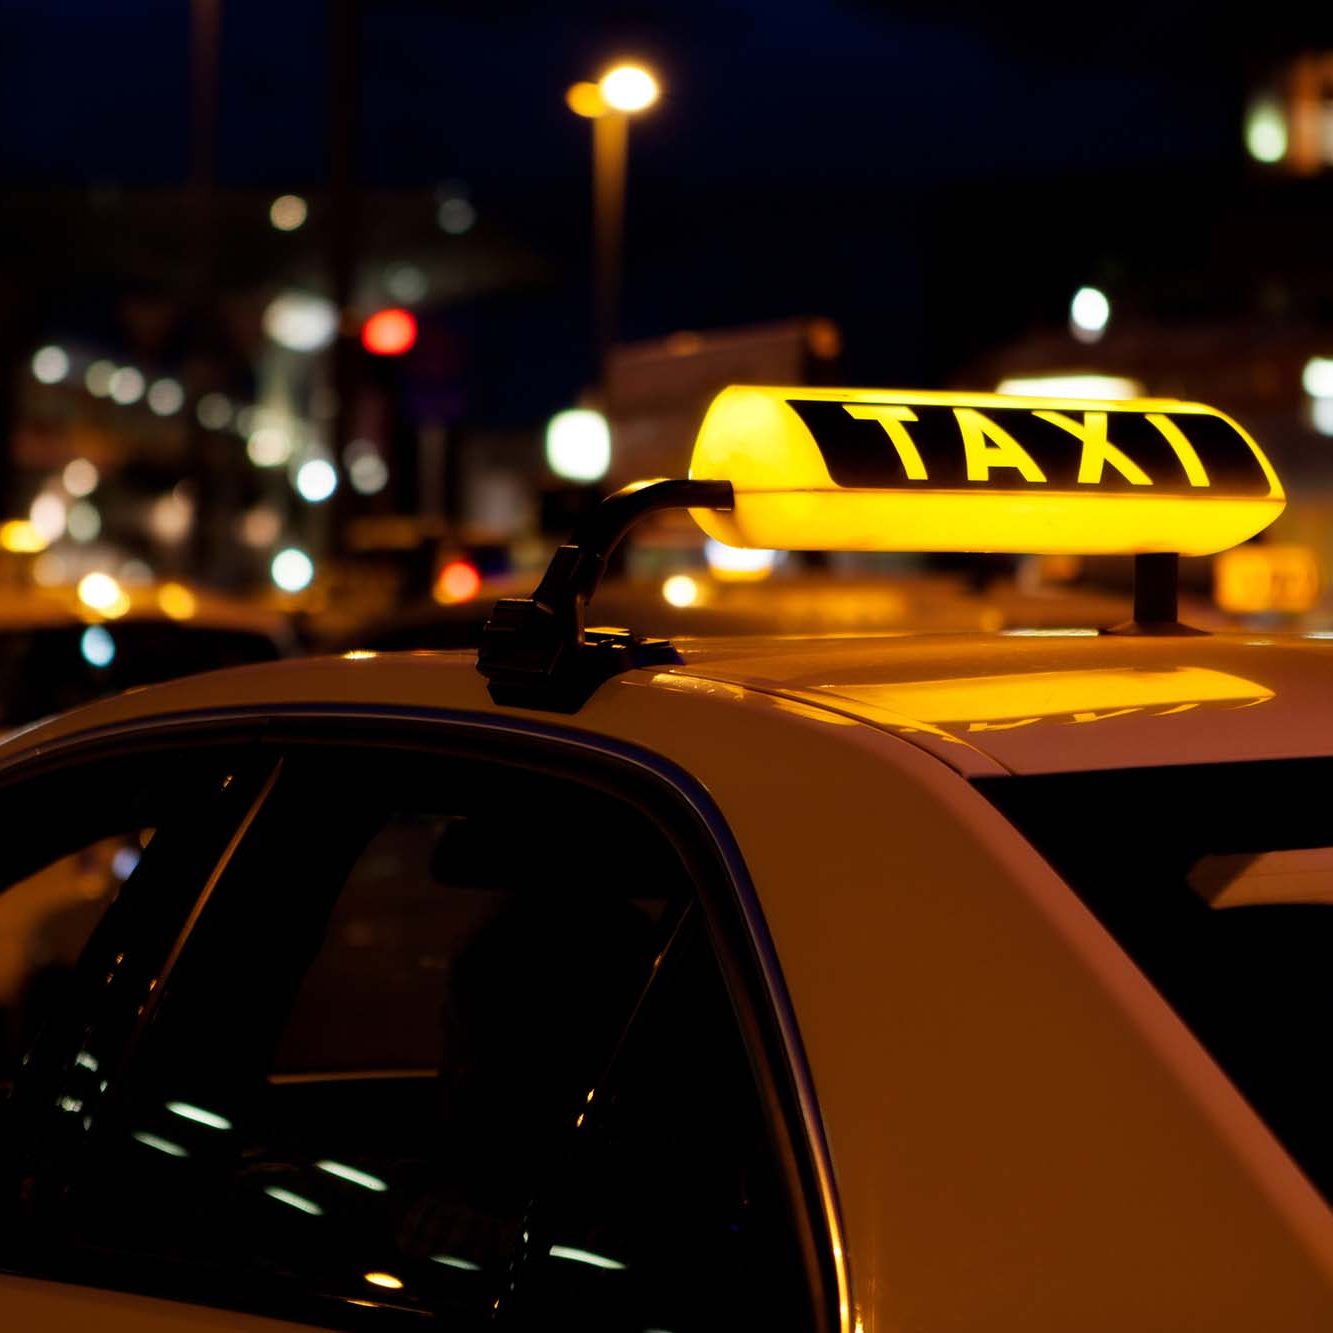 Yellow taxi sign at night